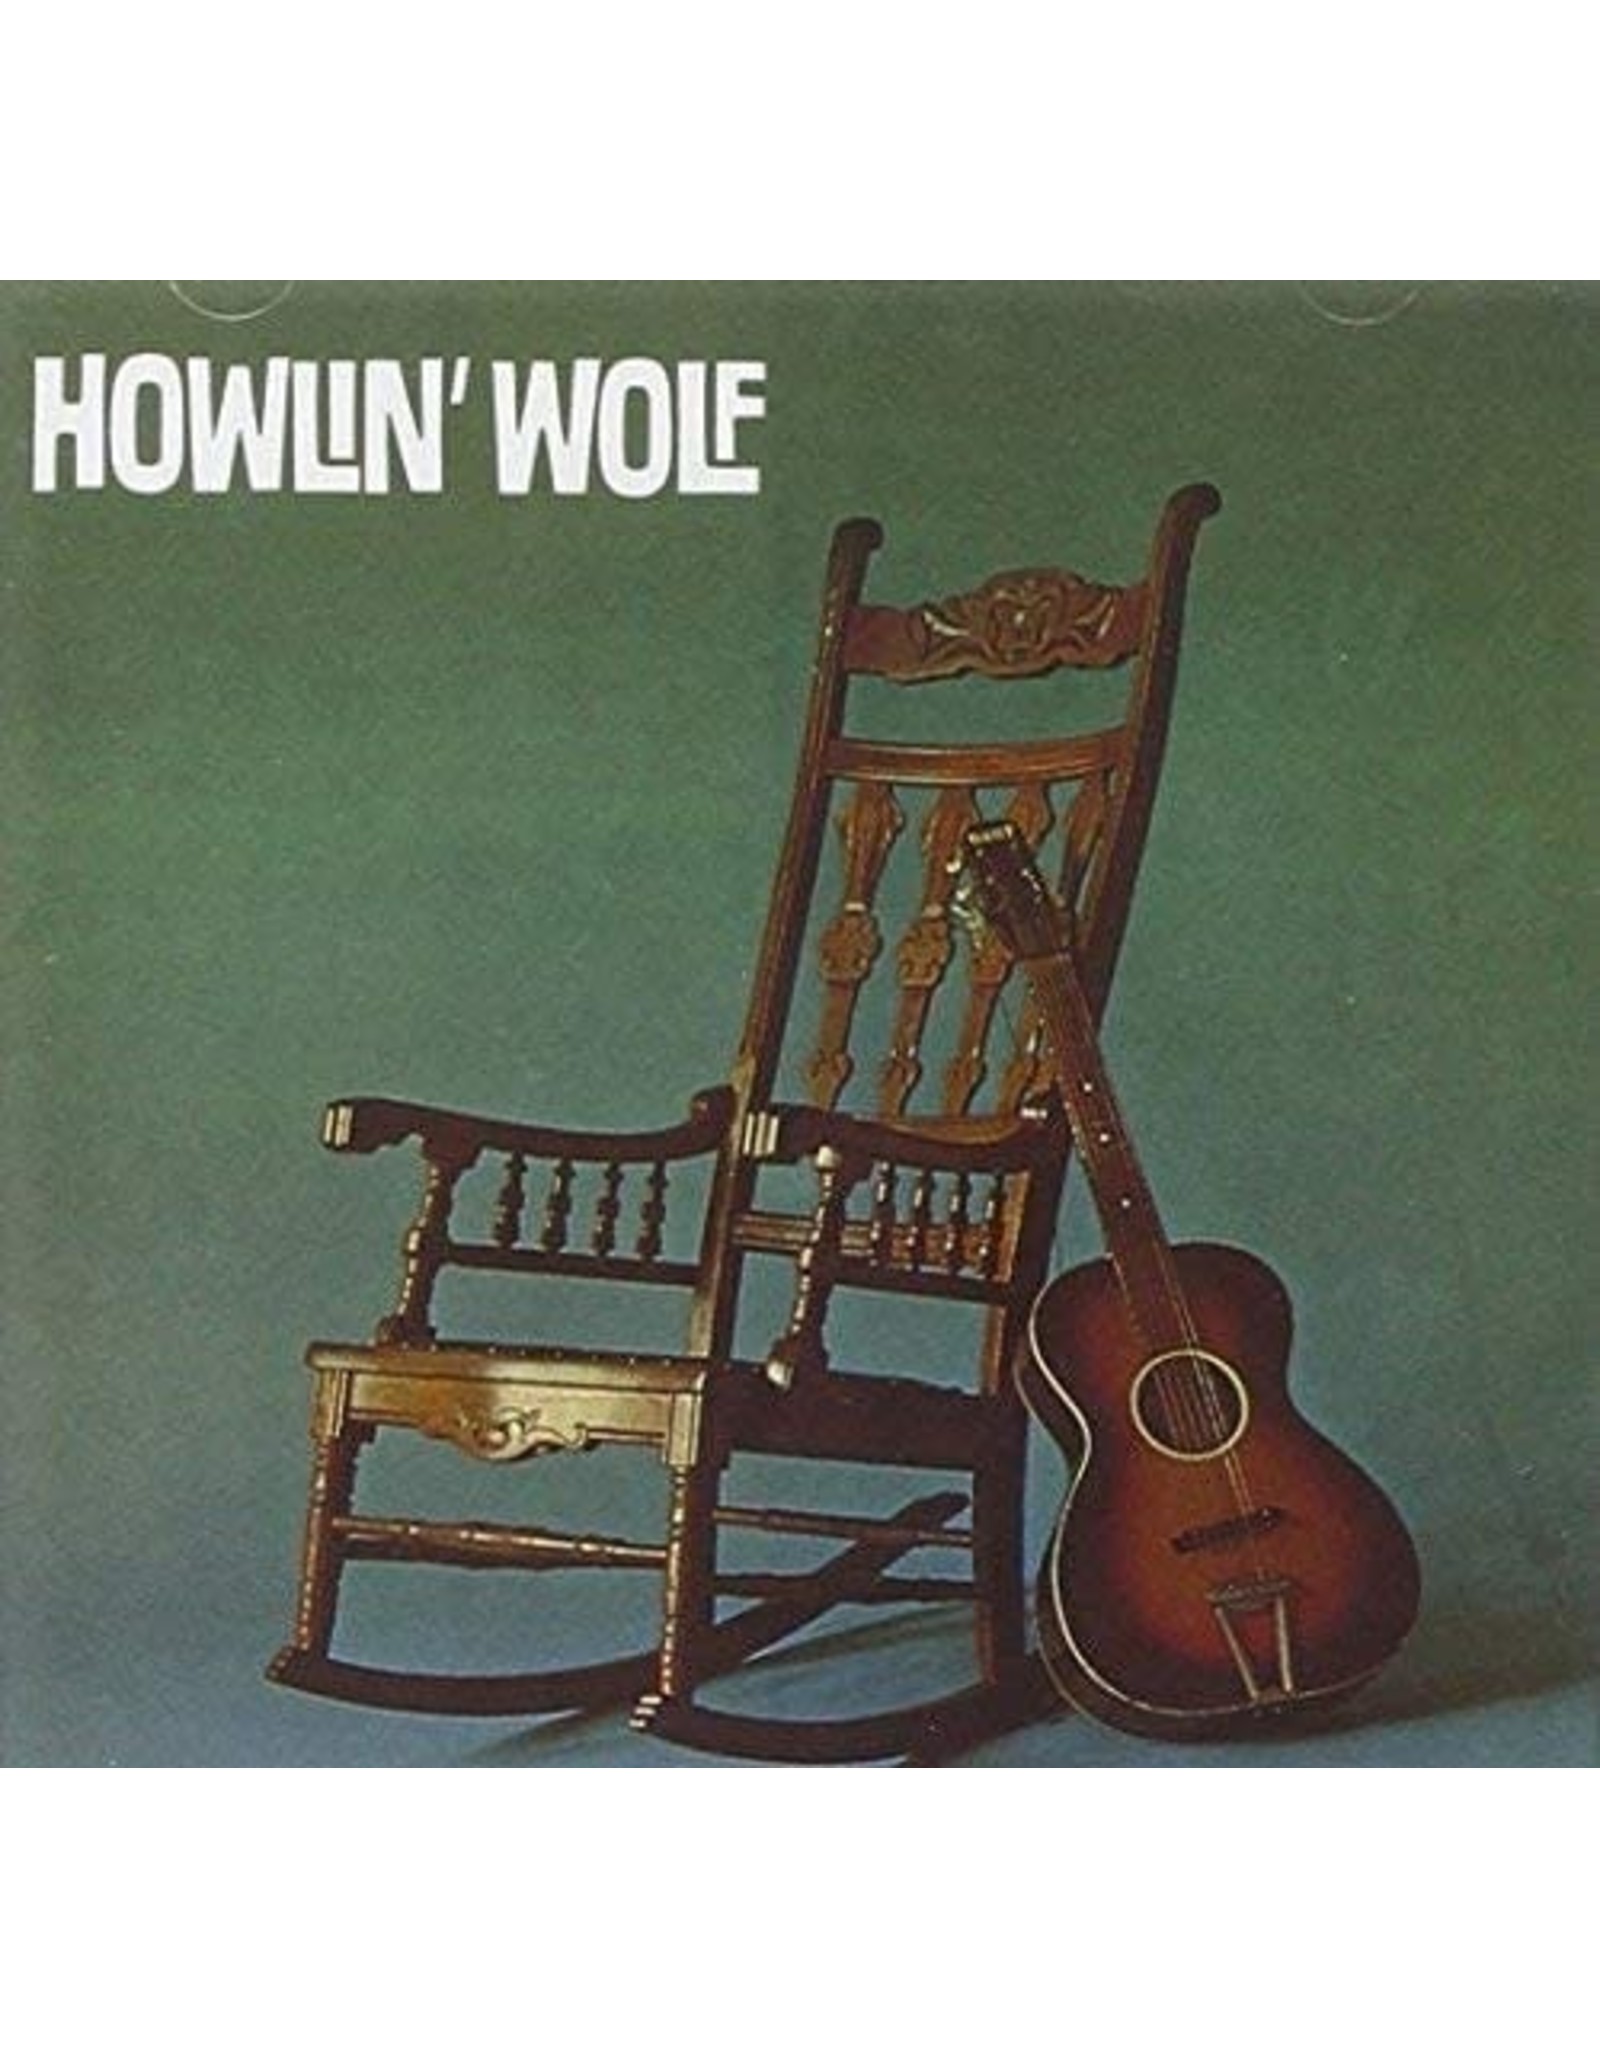 Howlin' Wolf - Howlin' Wolf (The Rocking Chair Album) LP